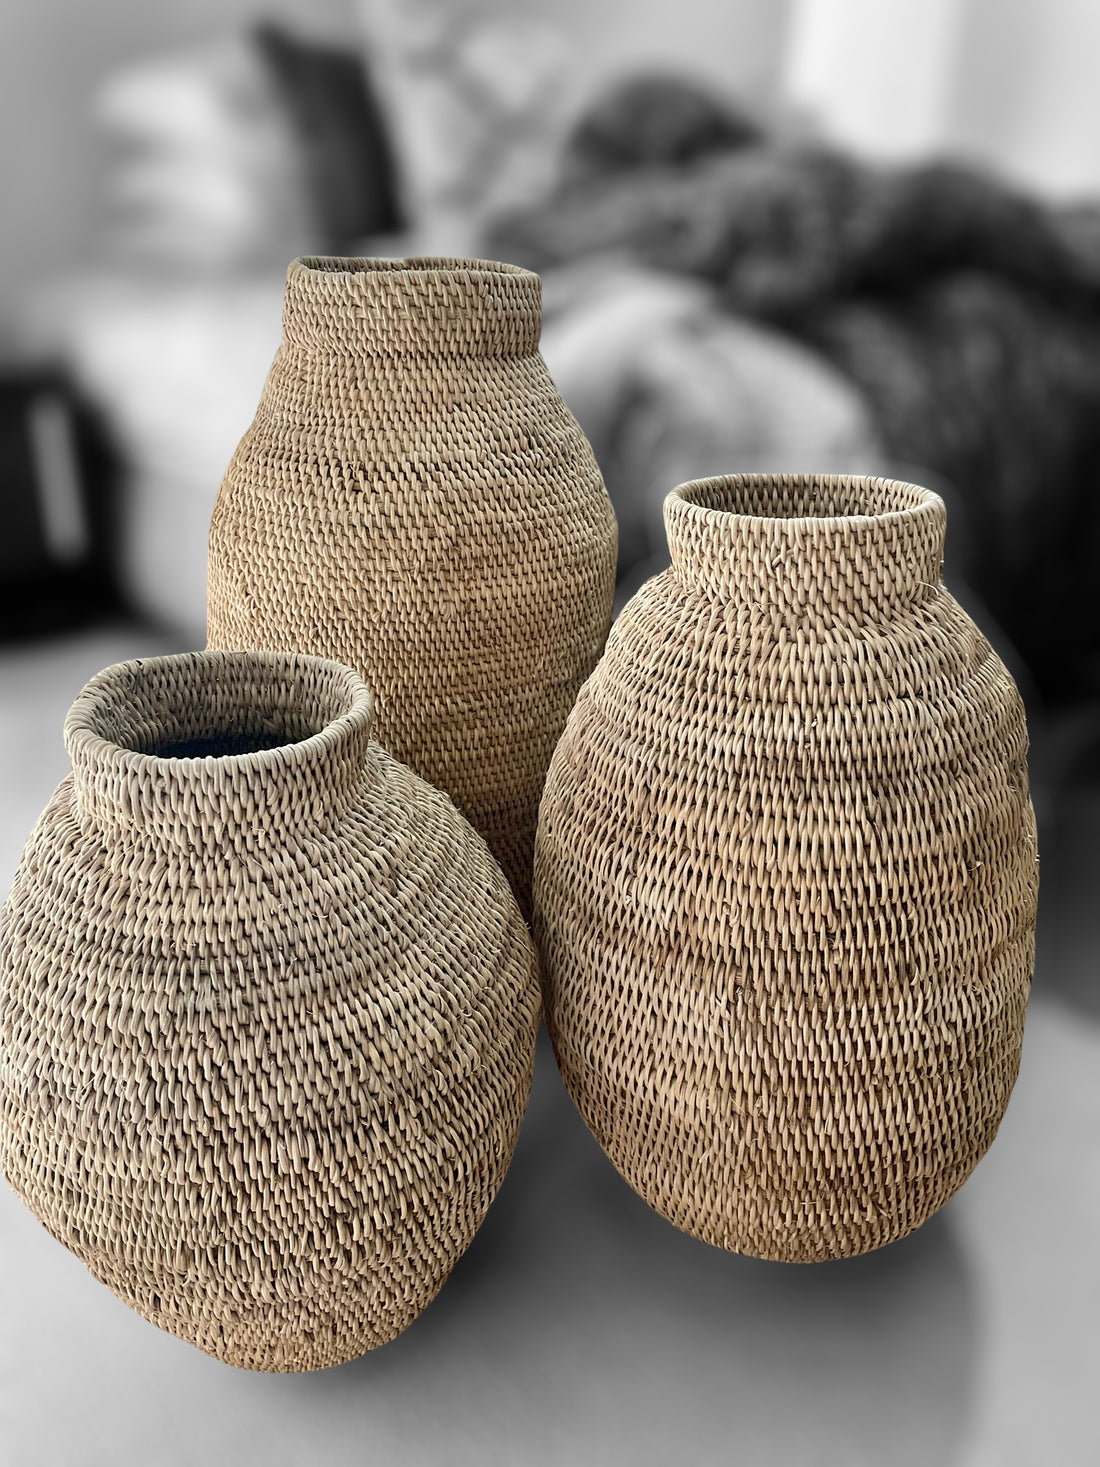 Buhera Baskets - Natural - eyahomeliving